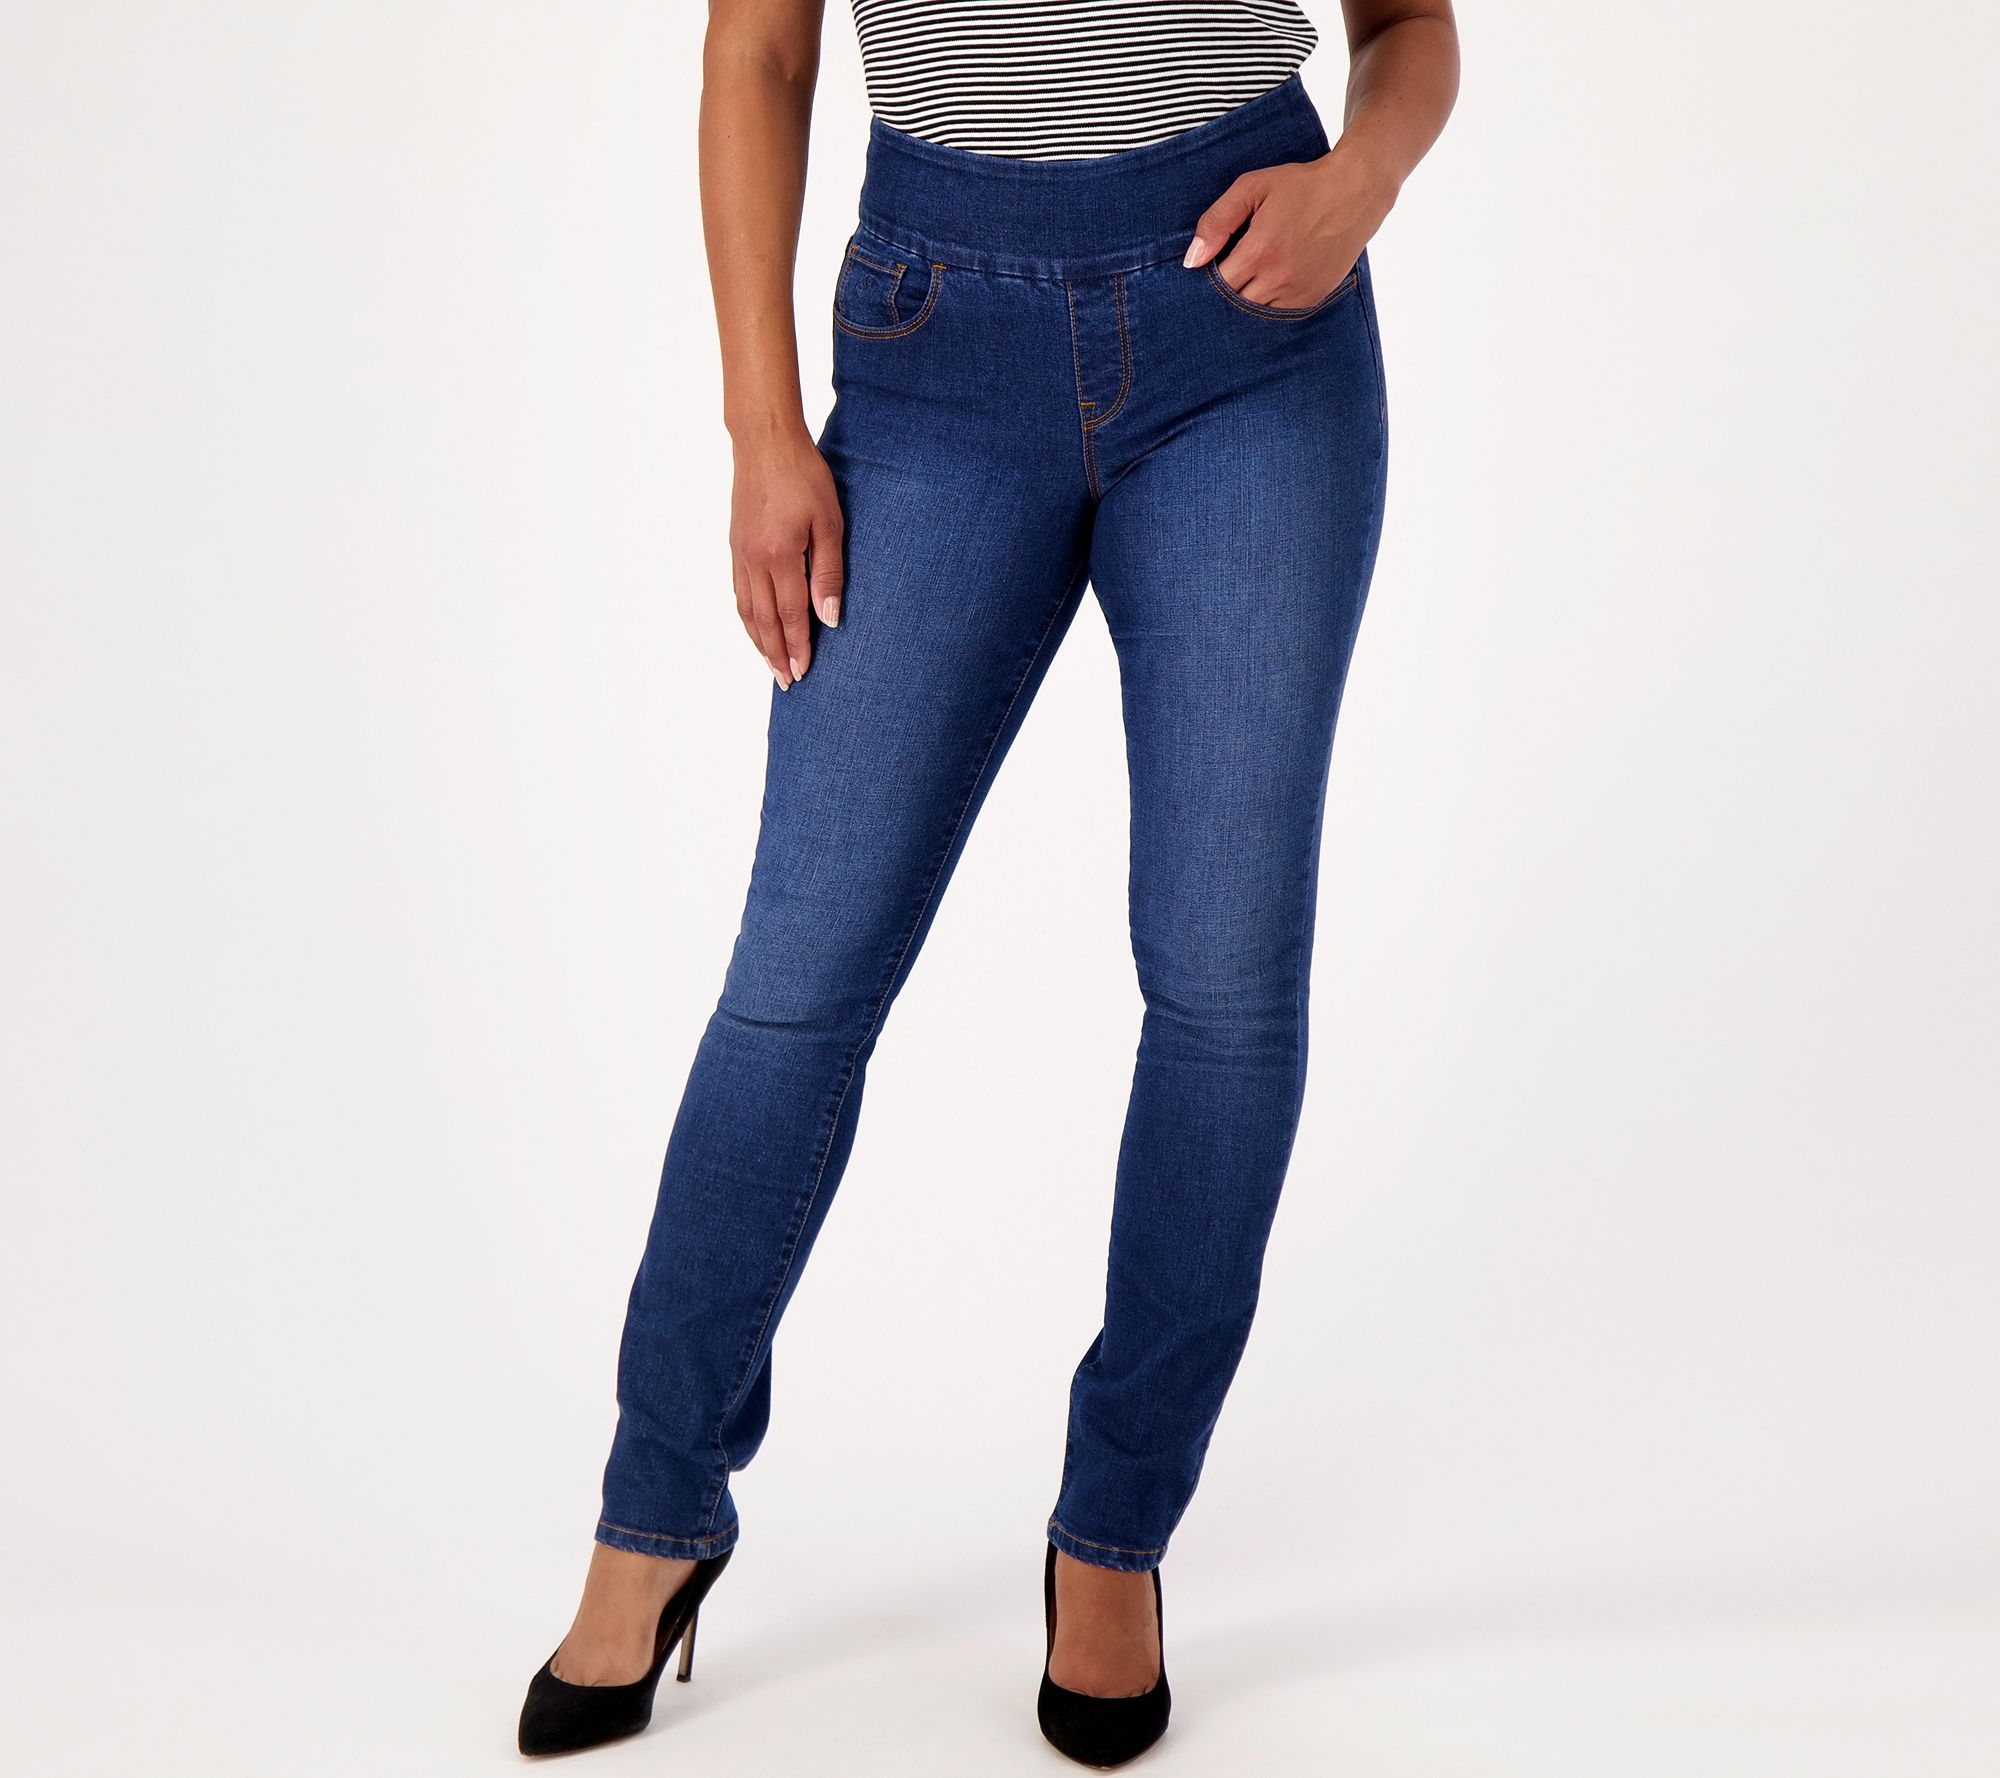 Gloria Vanderbilt Amanda Jeans Like New Size 16 Petite Lots of